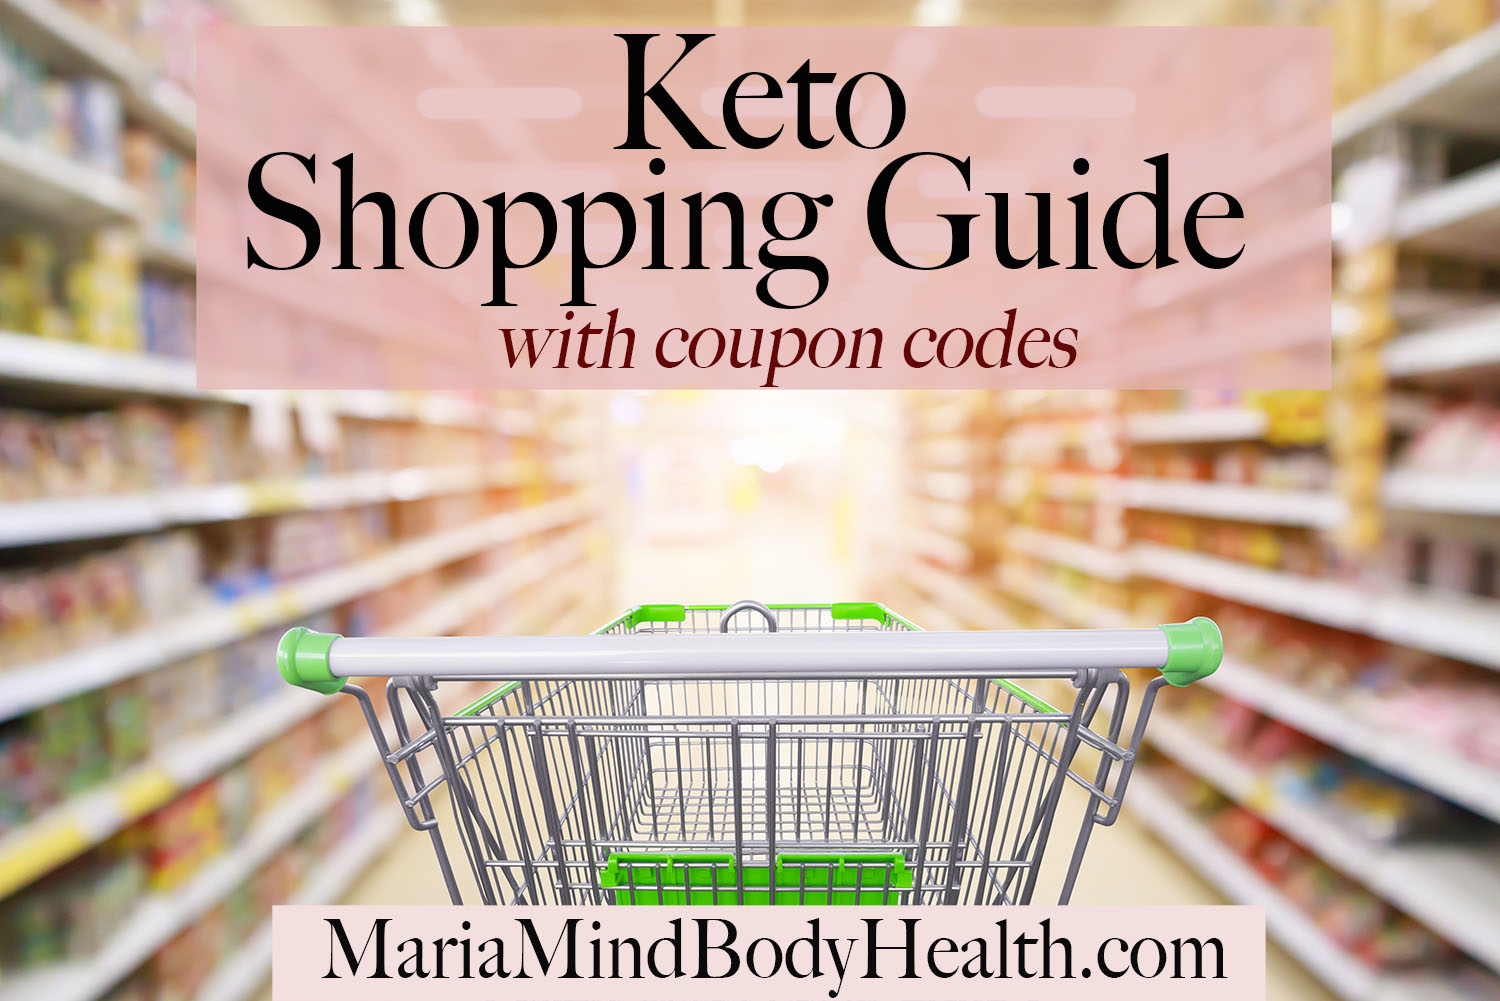 http://mariamindbodyhealth.com/wp-content/uploads/2012/05/keto-shopping-guide.jpg